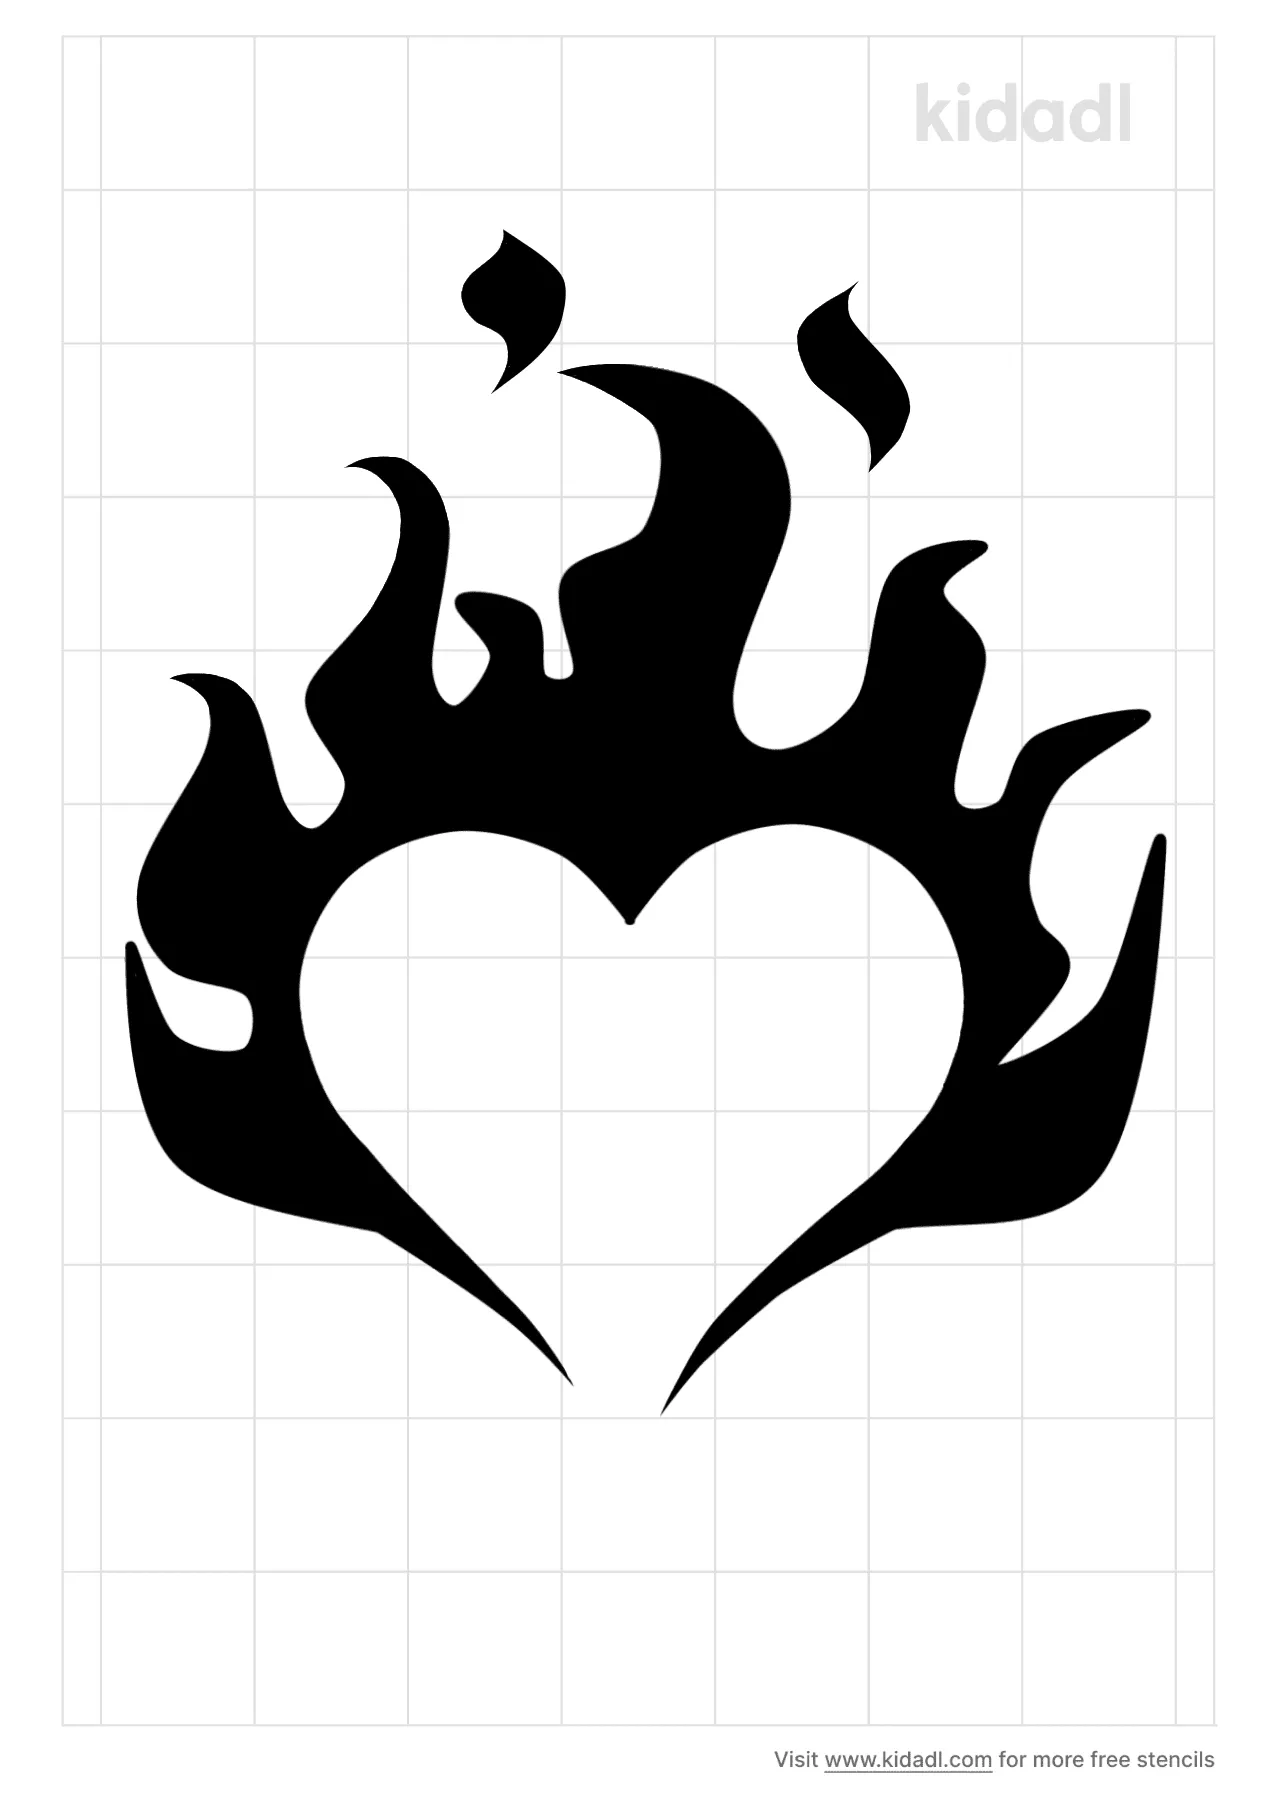 free-flaming-heart-stencil-stencil-printables-kidadl